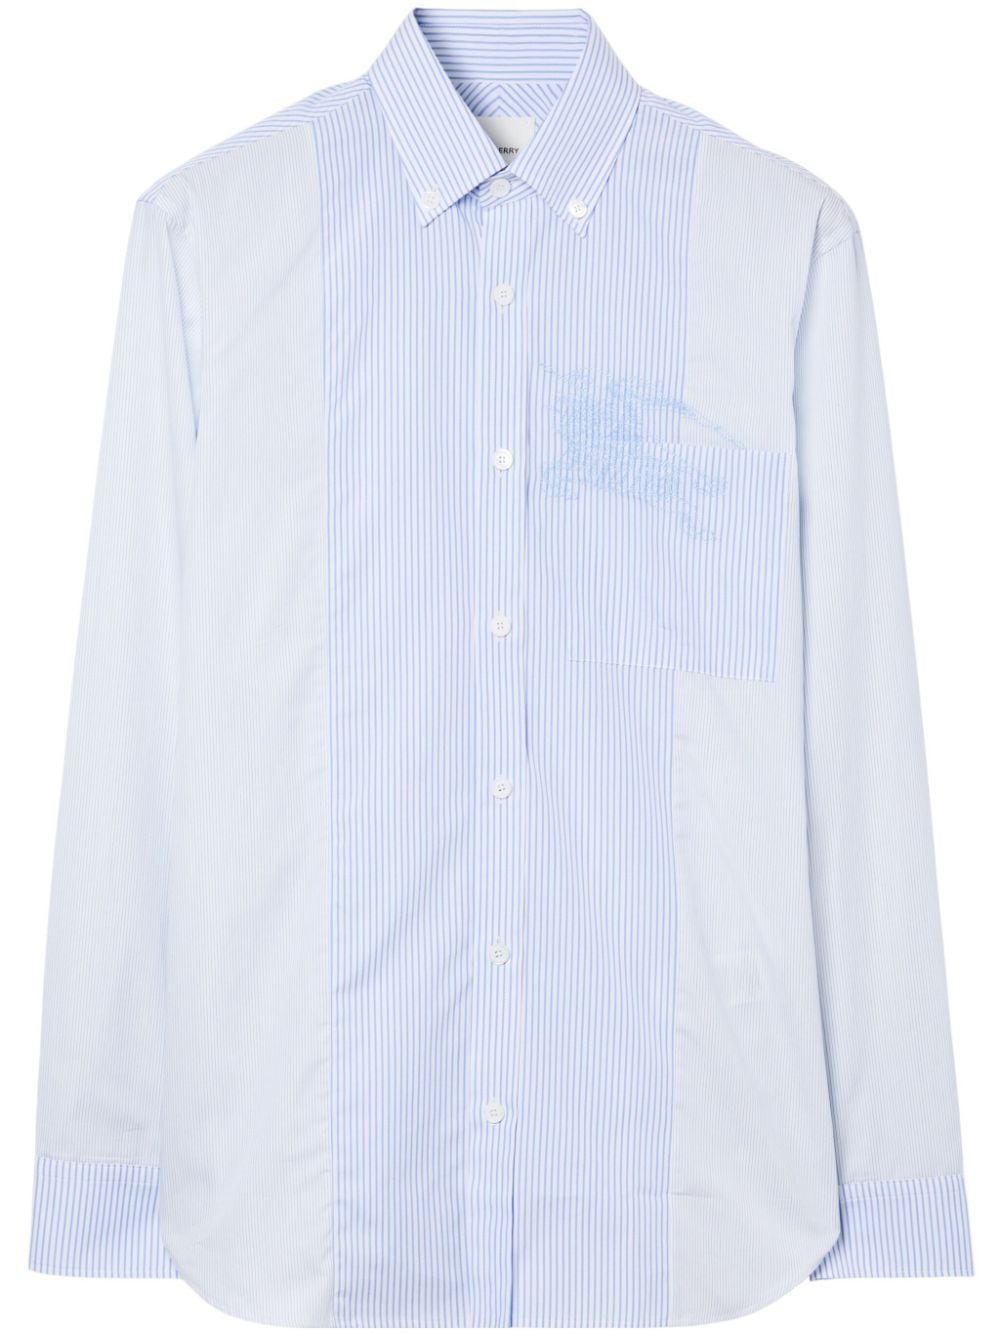 Burberry EKD striped cotton shirt - Blue